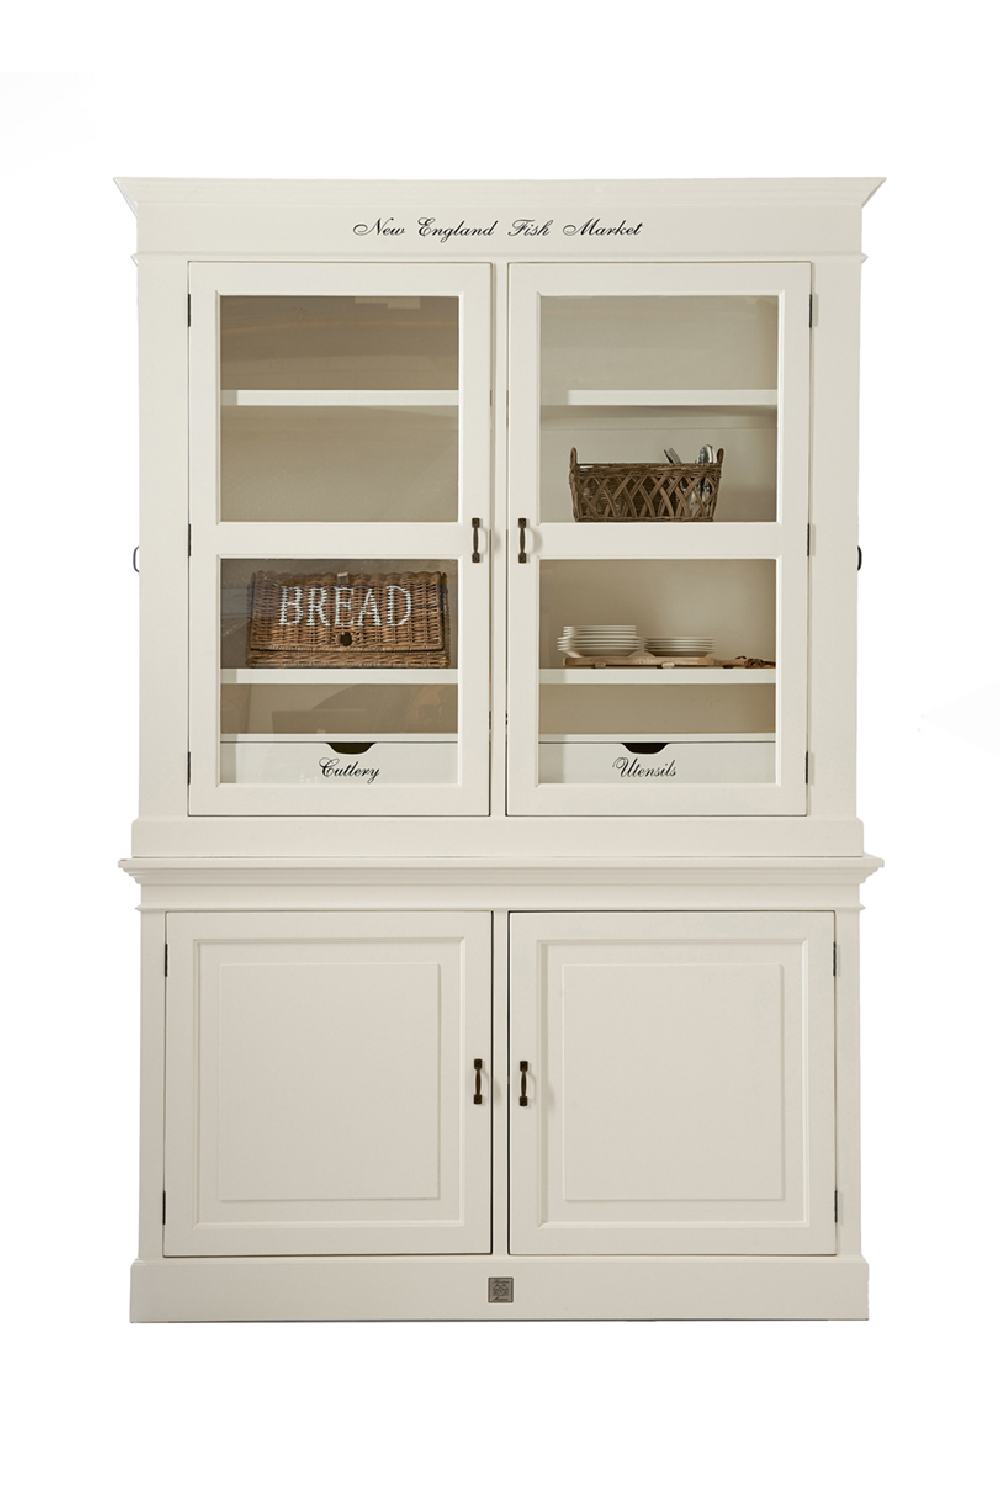 Uitstekend geroosterd brood Omkleden White Modern Classic Cabinet | Rivièra Maison | Wood Furniture